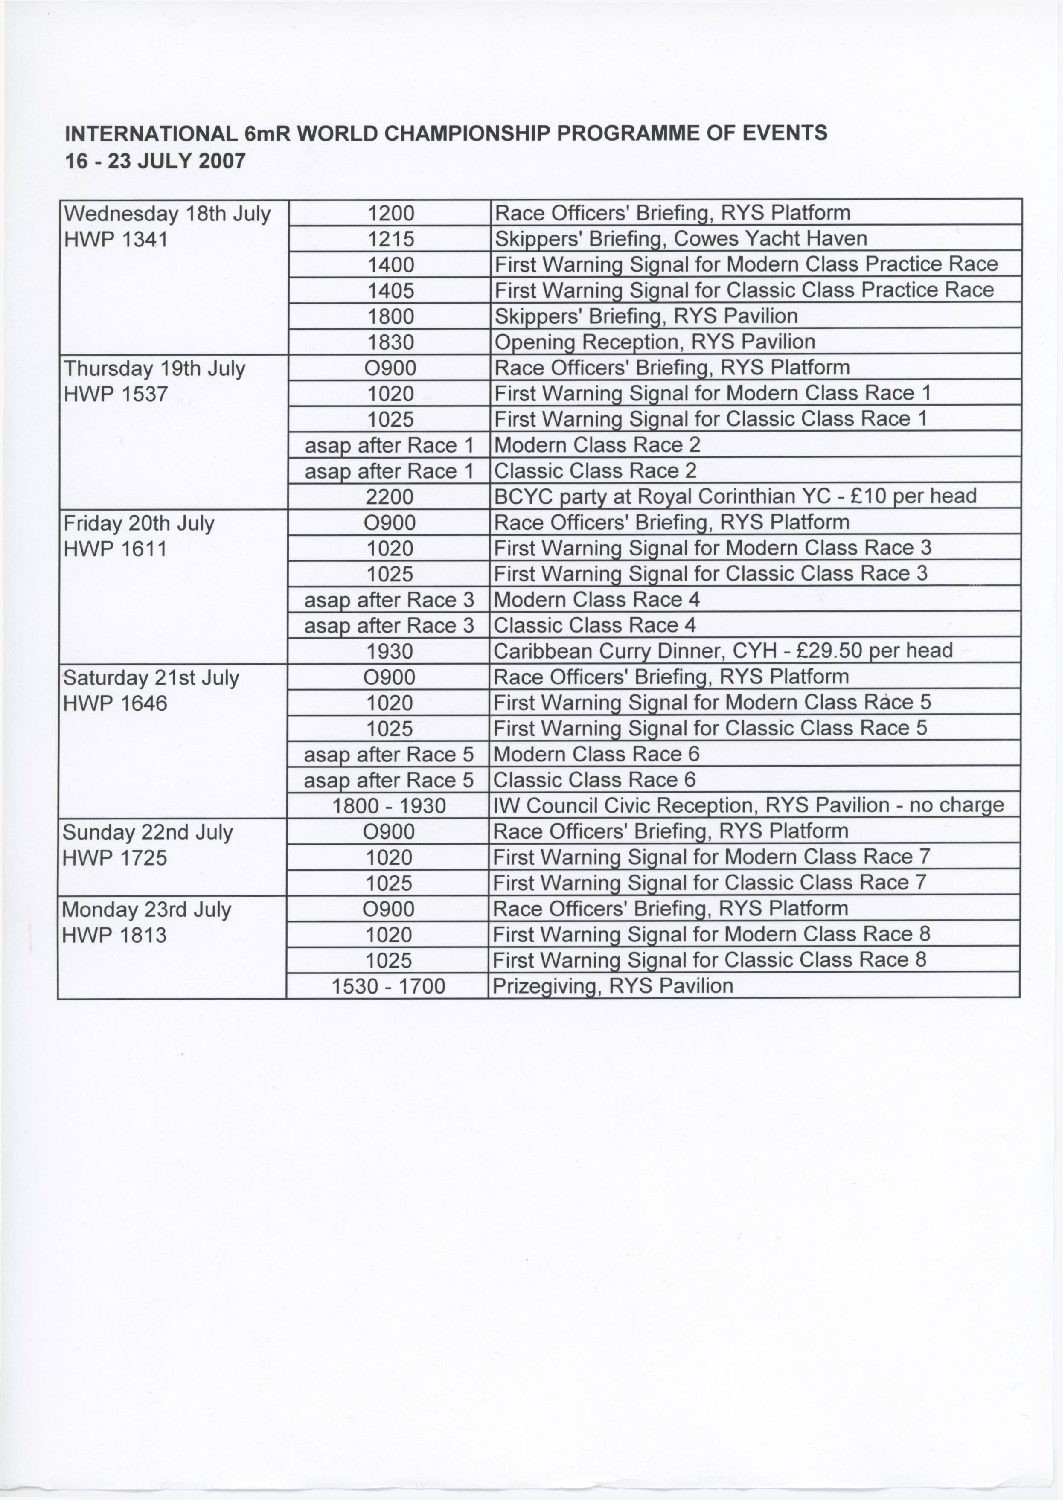 Info sheet, World Championships 2007